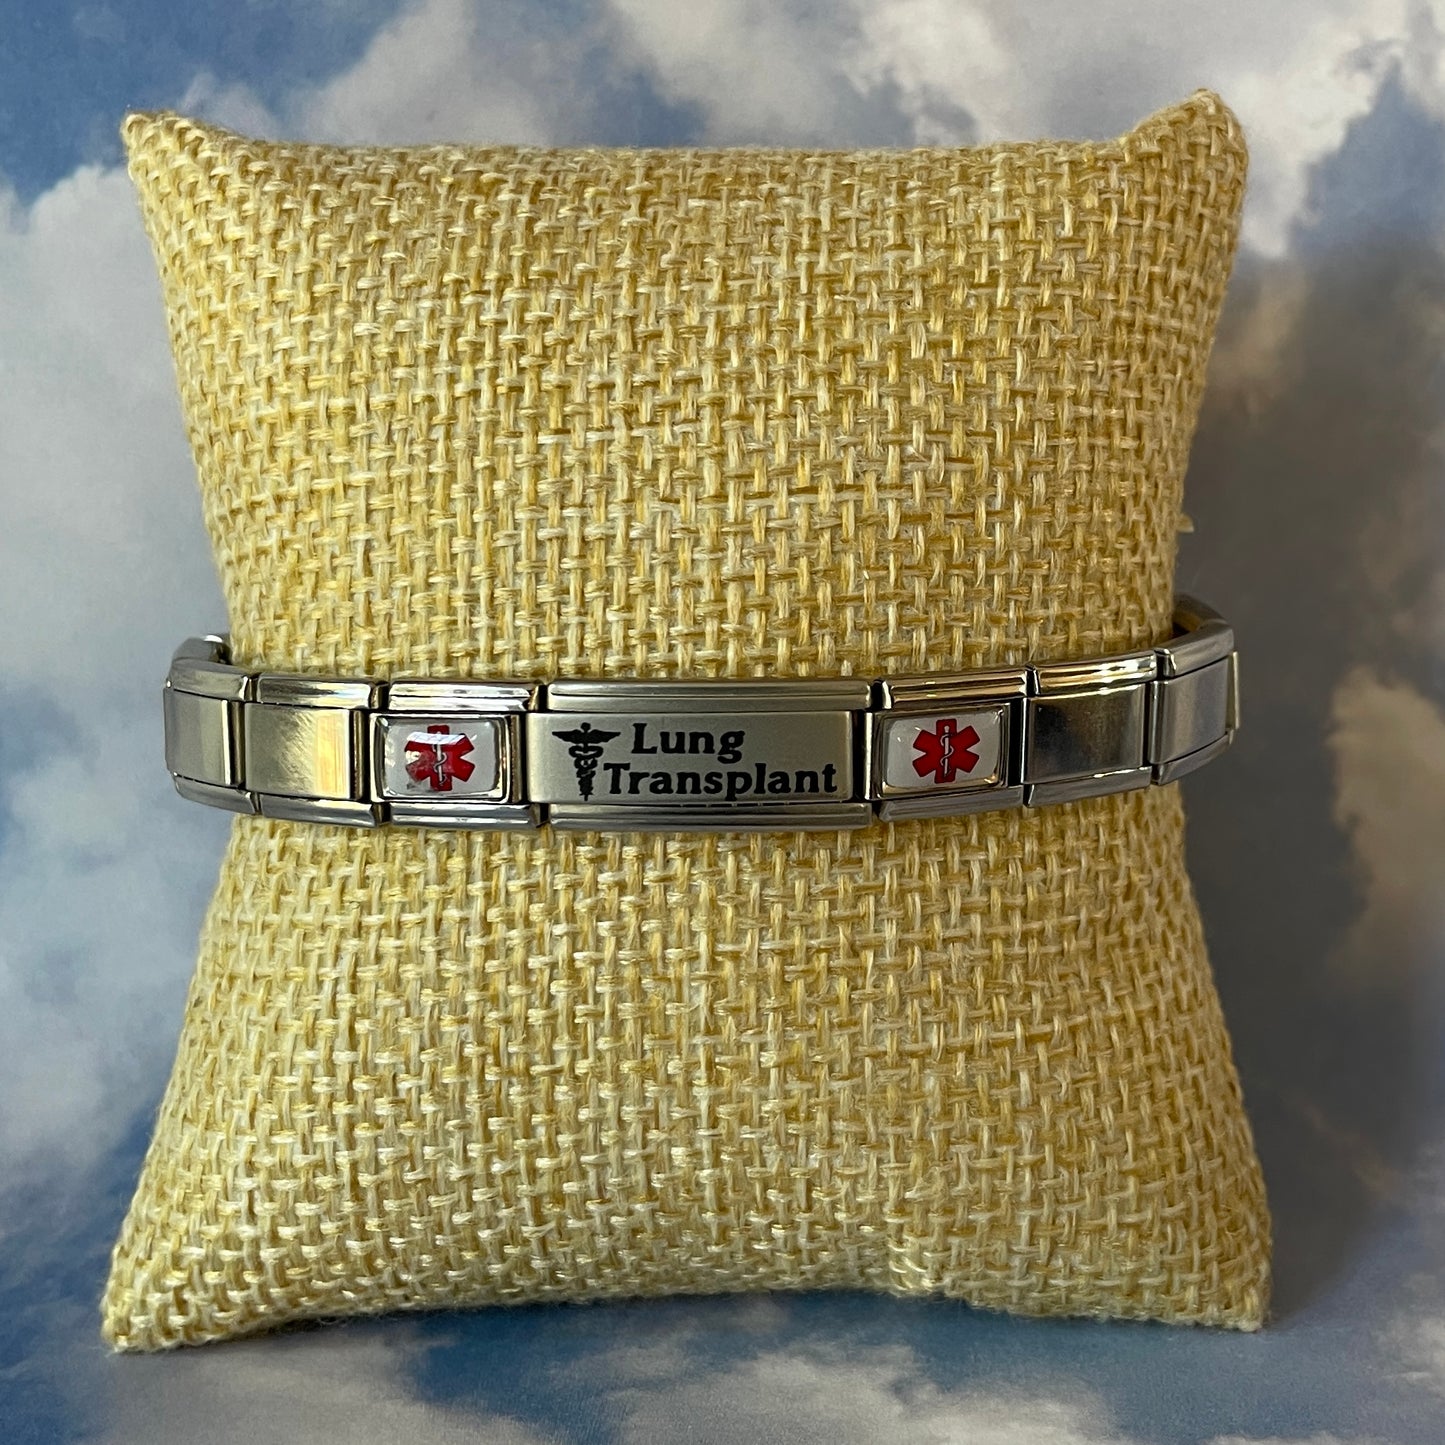 Gadow Jewelry Lung Transplant Medical Alert Bracelet Italian Charm Style